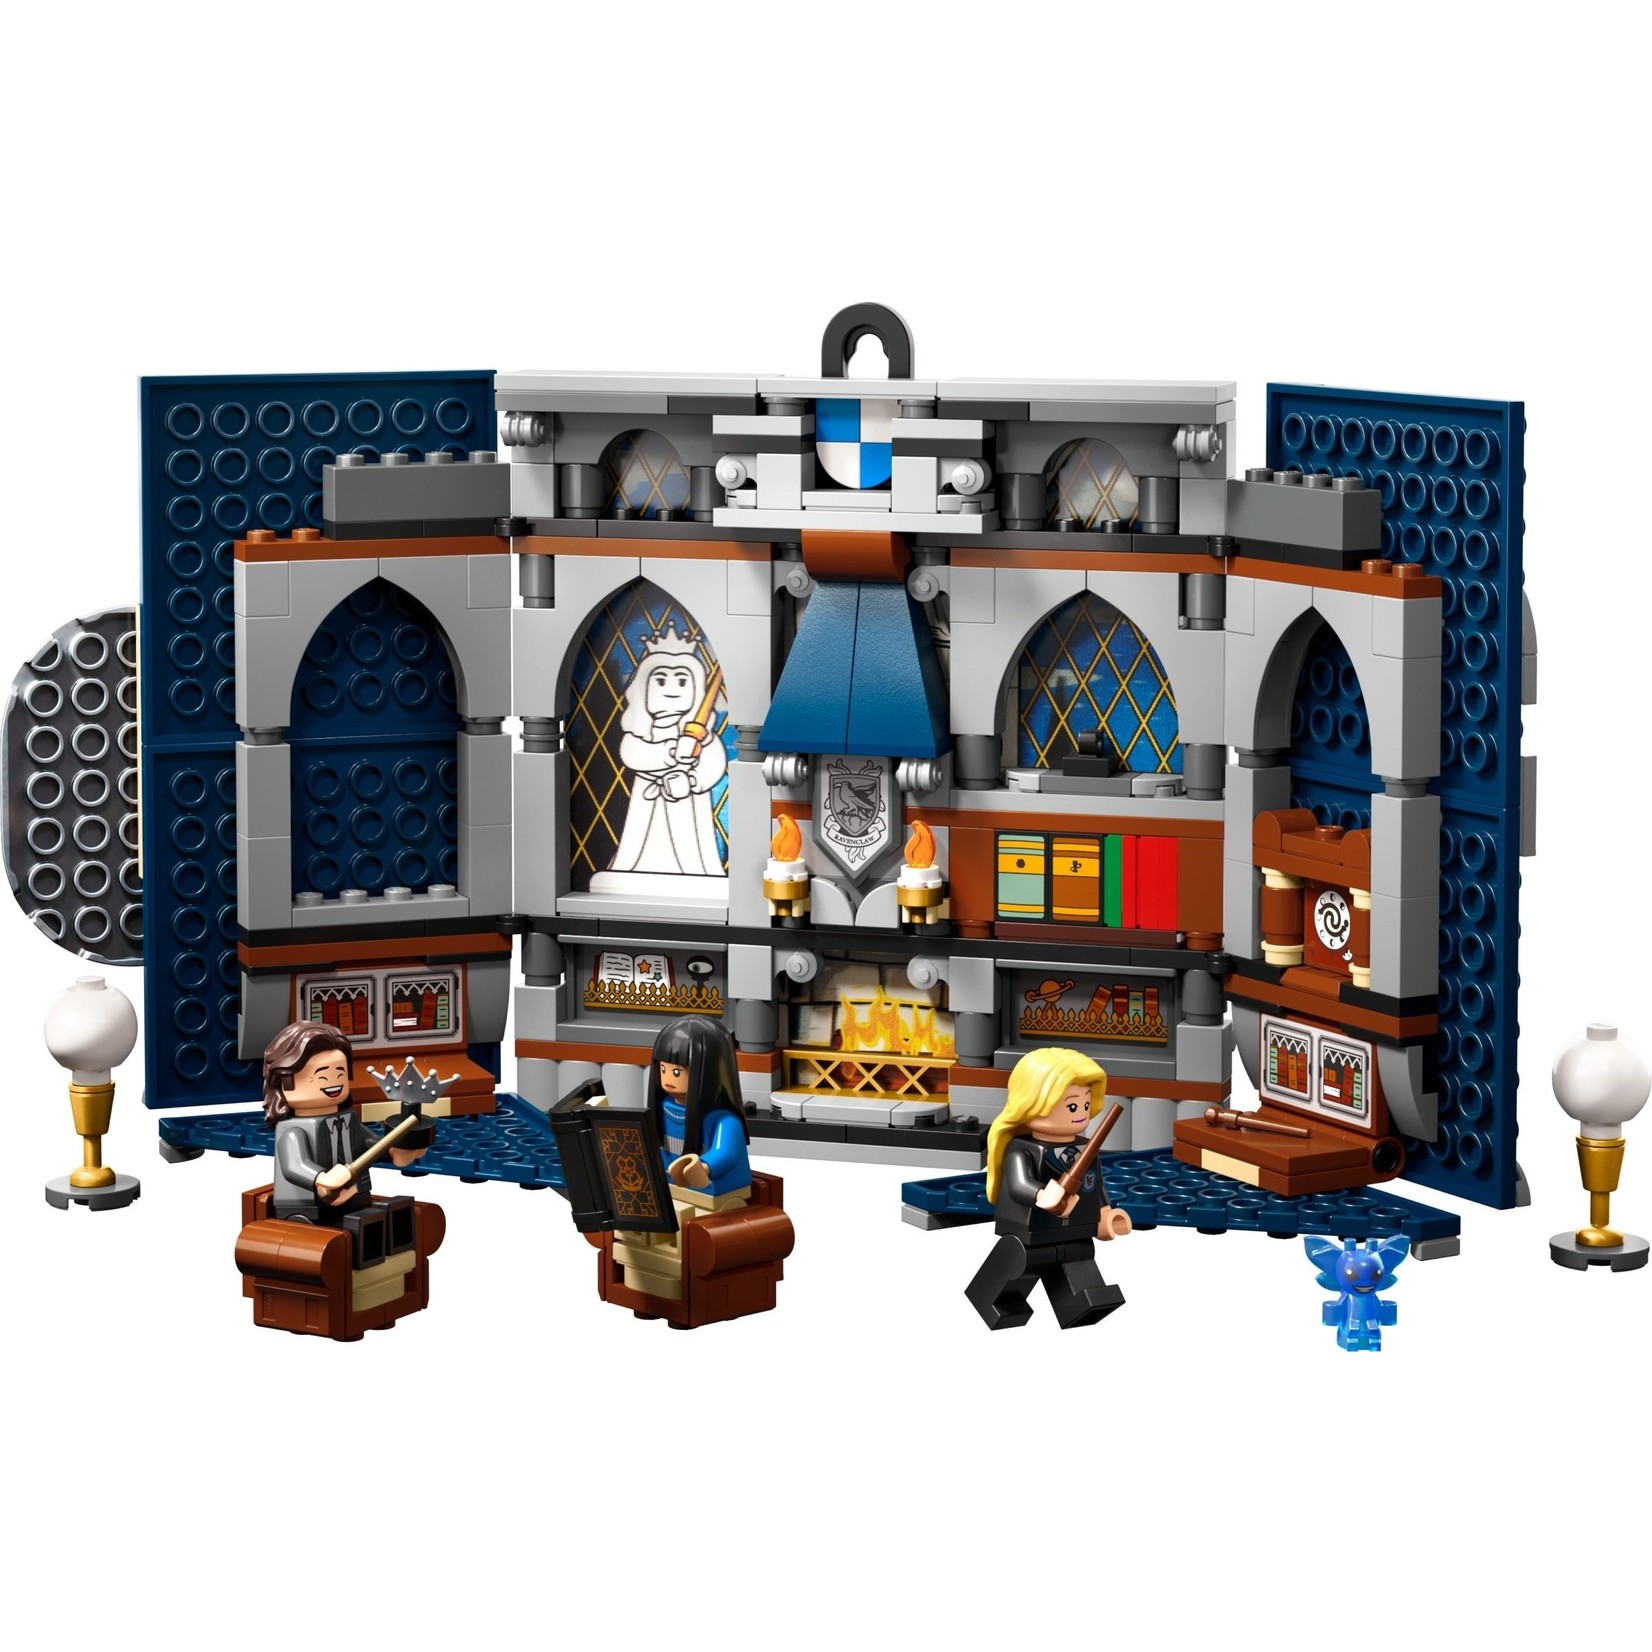 LEGO Ravenklauw™ huisbanner - 76411